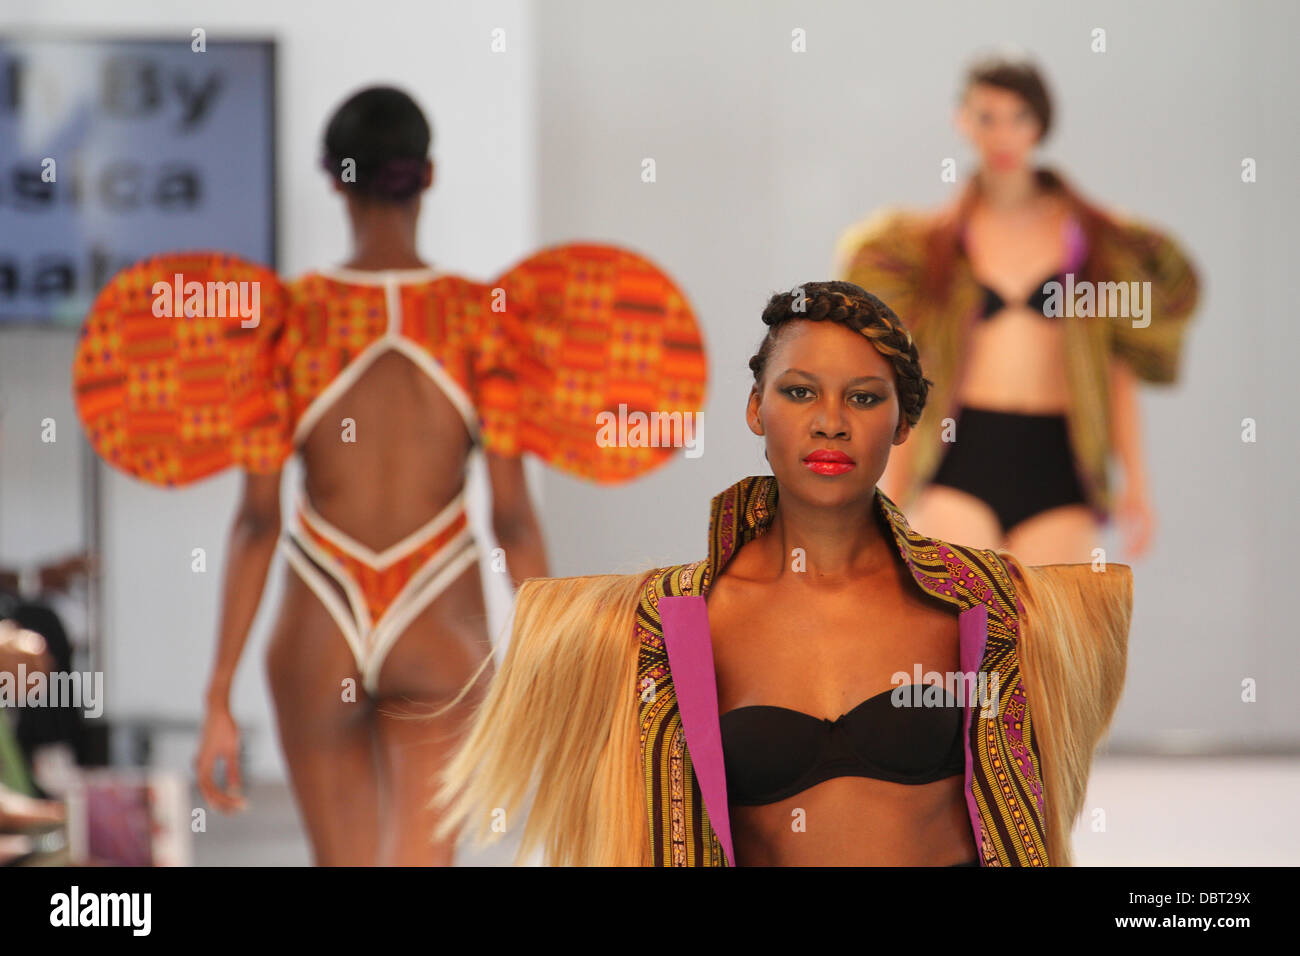 AFWL 13 Sabato ore 14.30 Sfilata di moda con Baah da Jessica Baah. David credito Mbiyu/Alamy Live News Foto Stock